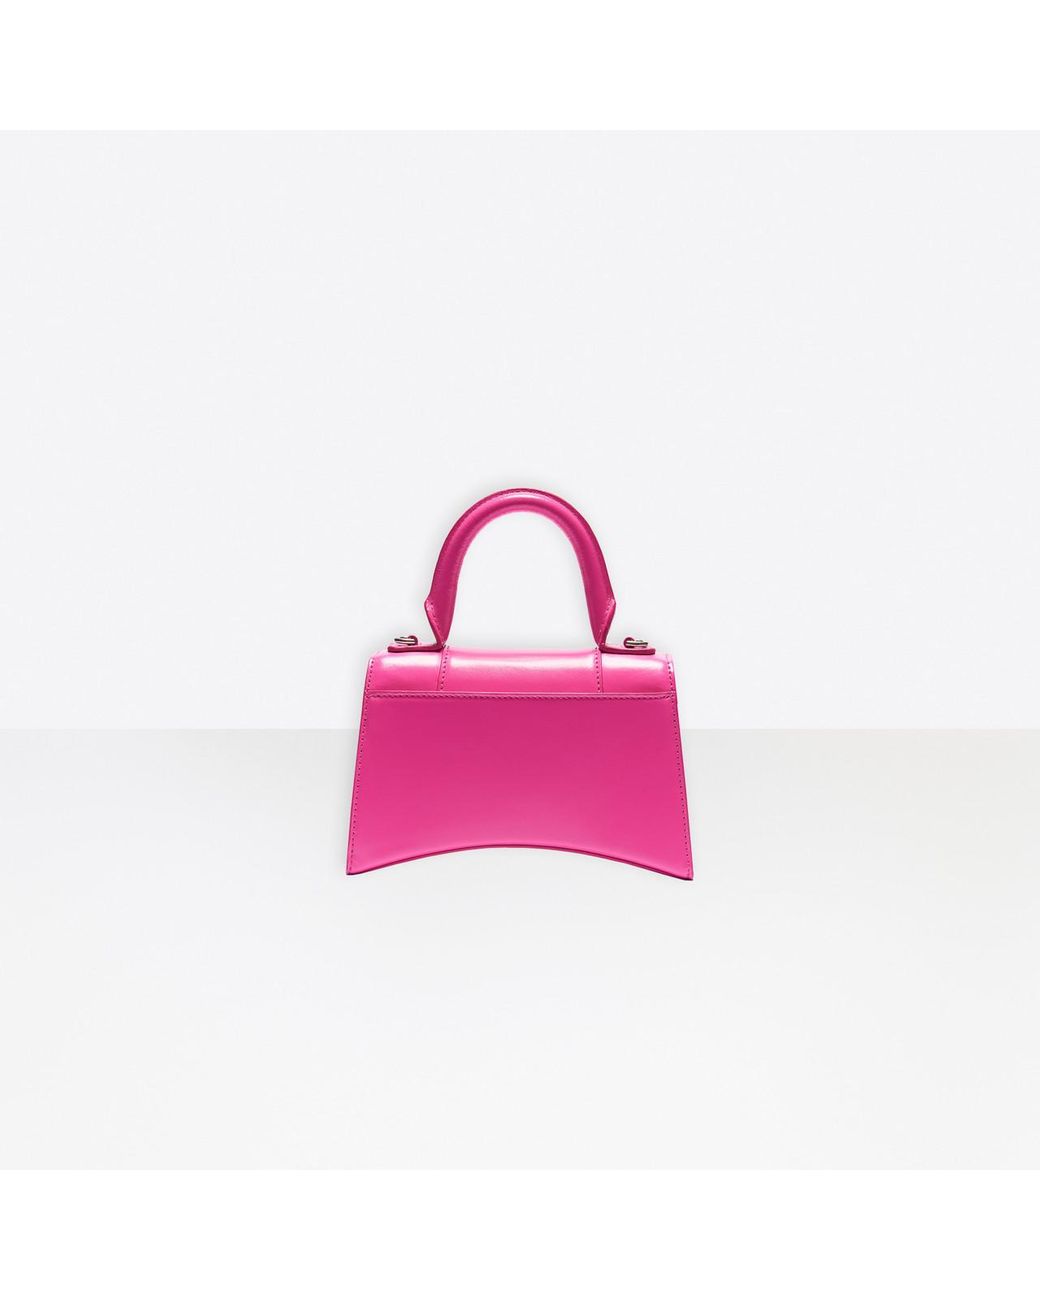 Balenciaga Mini Hourglass Top Handle Bag in Candy Pink  FWRD